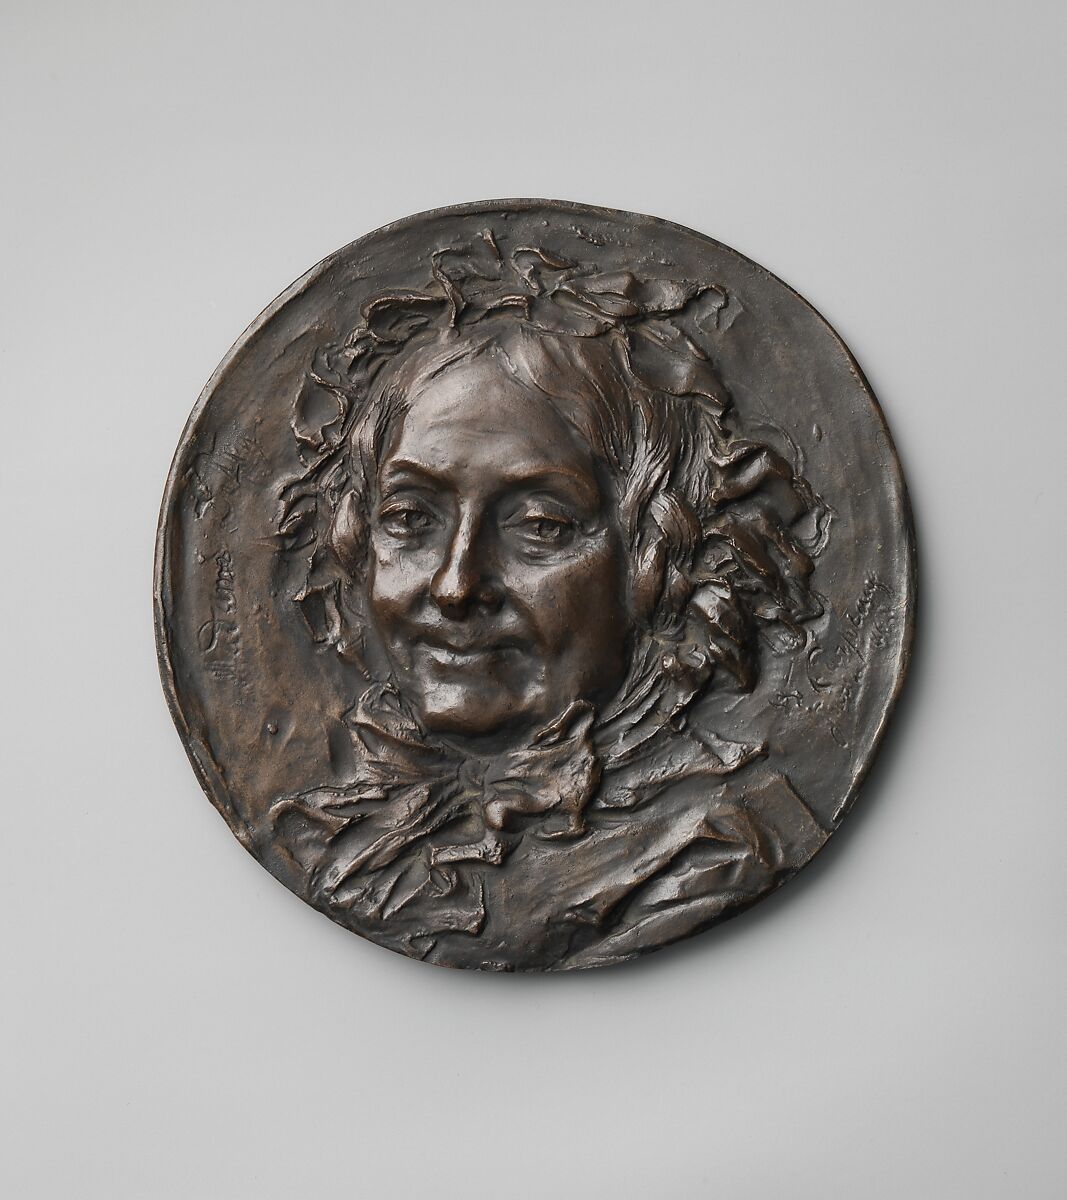 Madame Defly (1785–1875), Jean-Baptiste Carpeaux (French, Valenciennes 1827–1875 Courbevoie), Cast bronze, French, Paris 